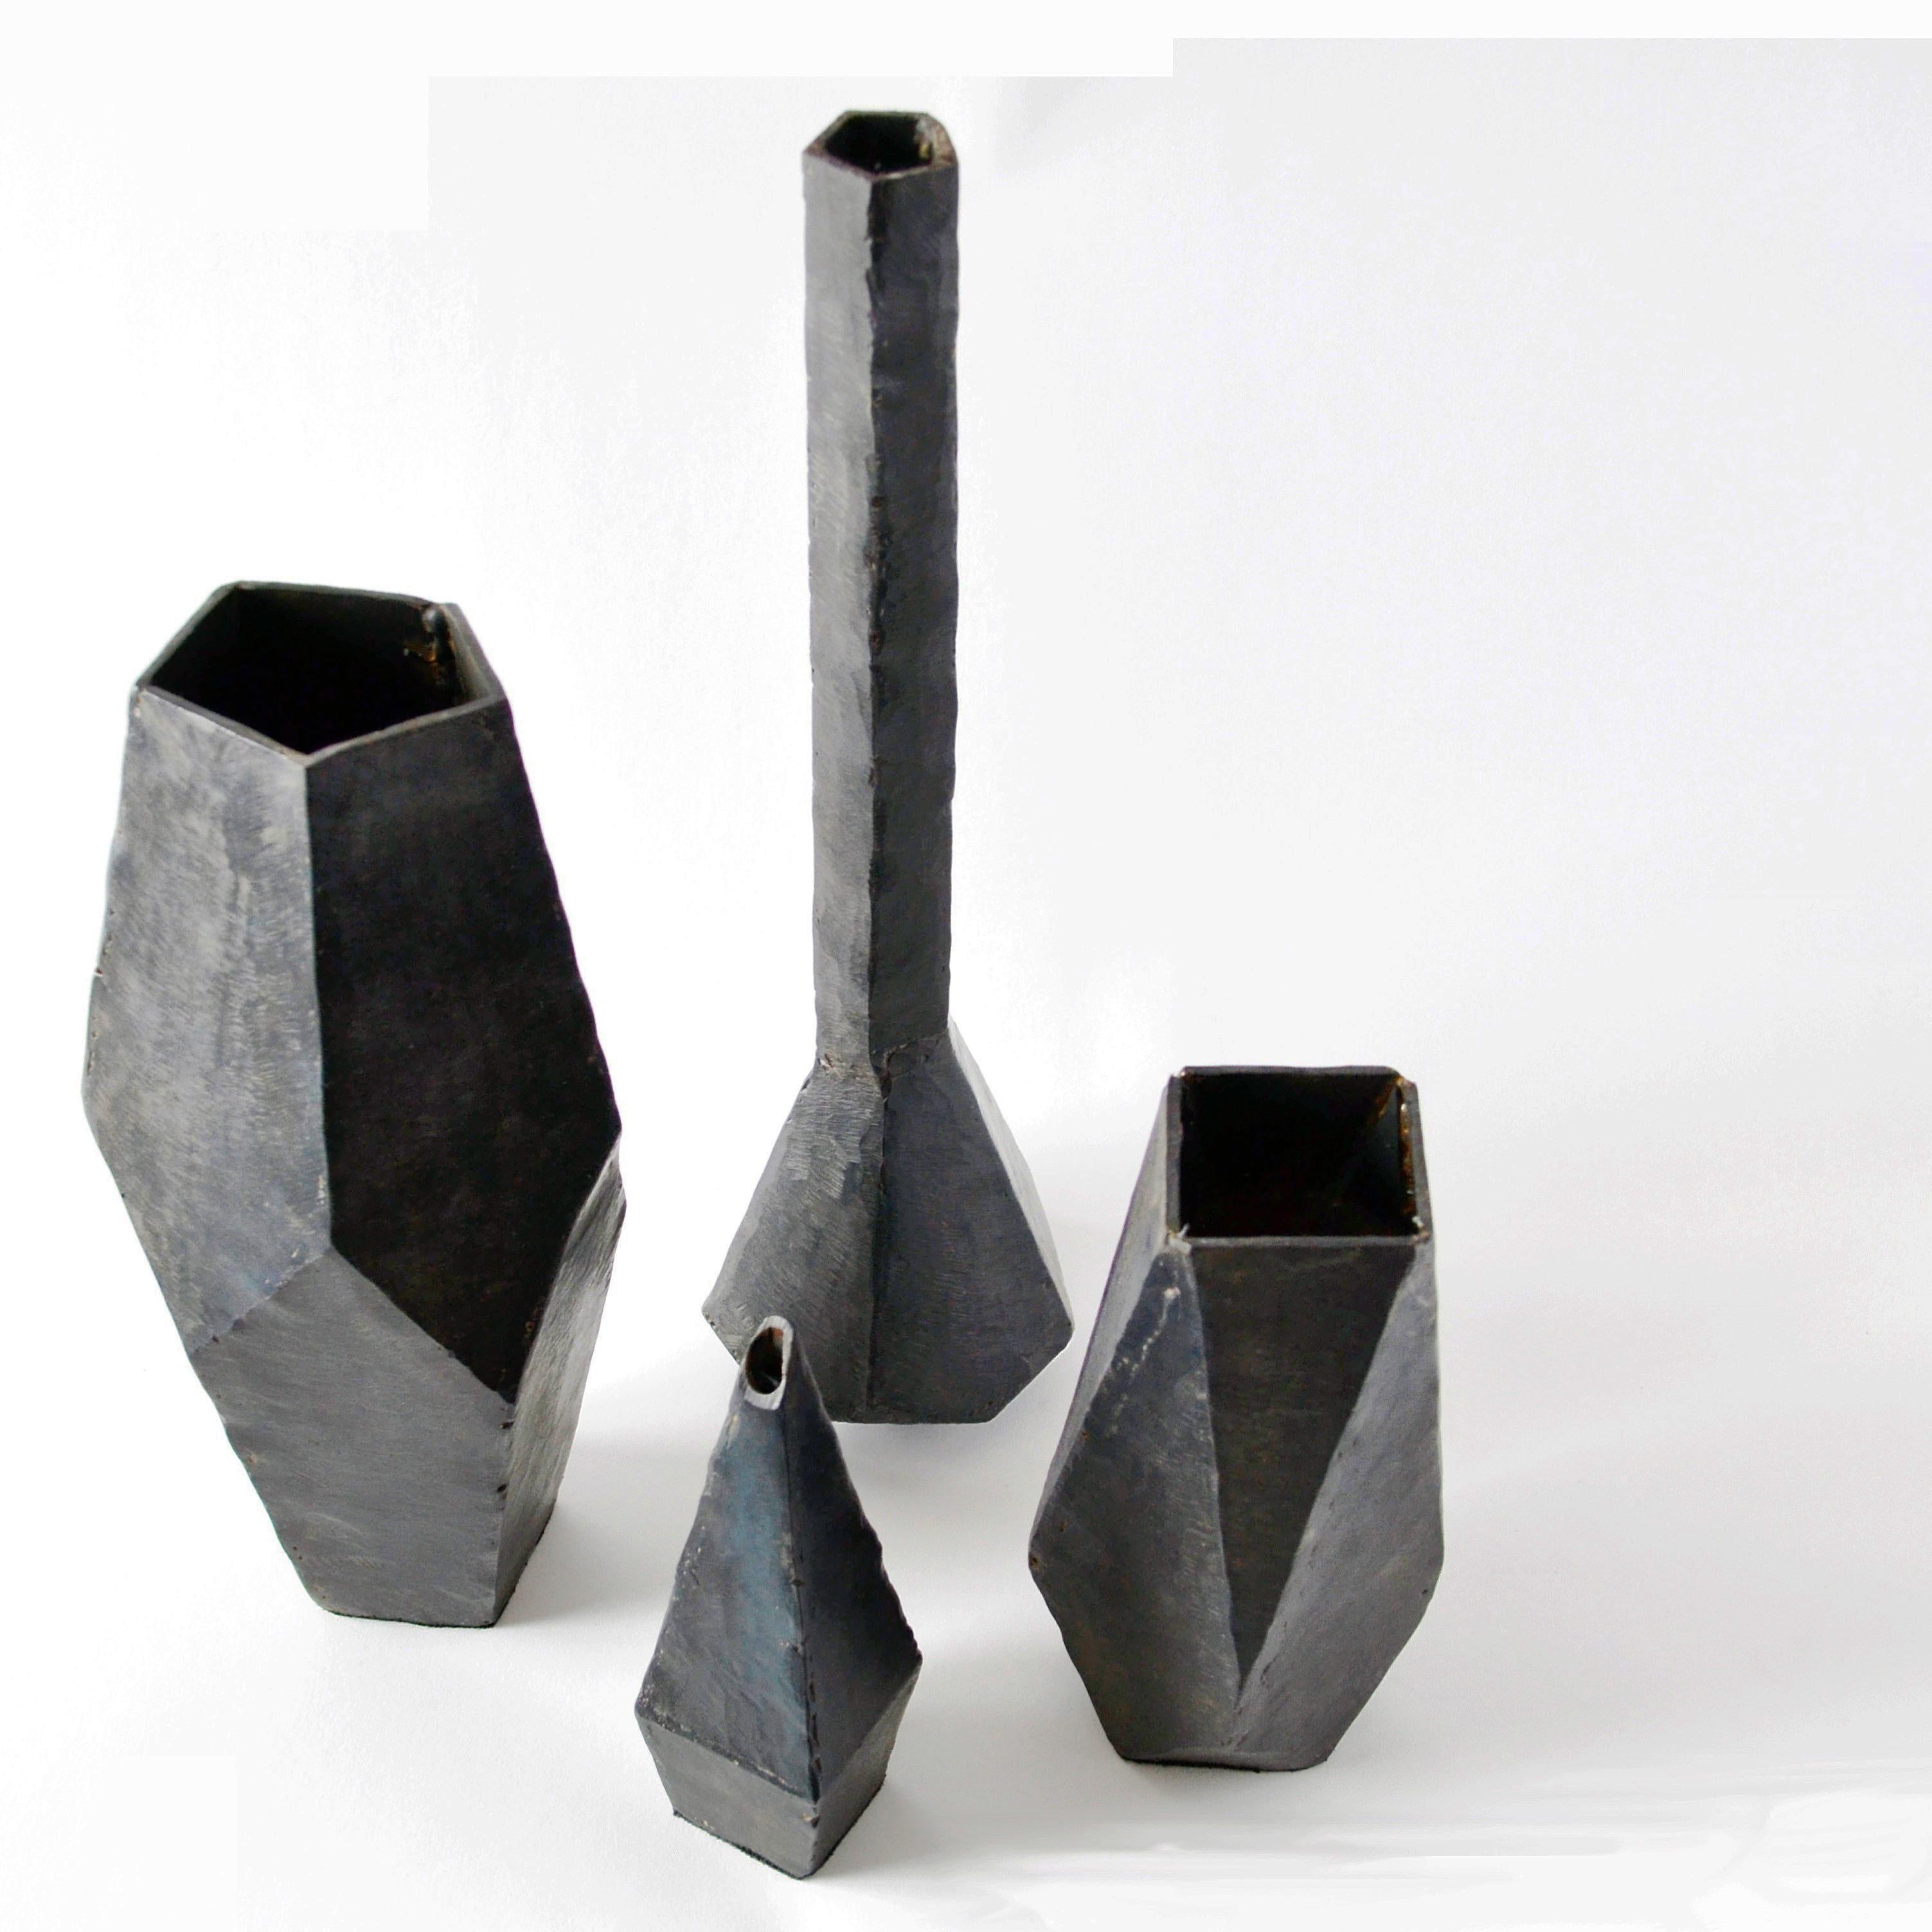 Forged Geometric Vessel Sculpture Handmade by J.M. Szymanski, Blackened and Waxed Iron